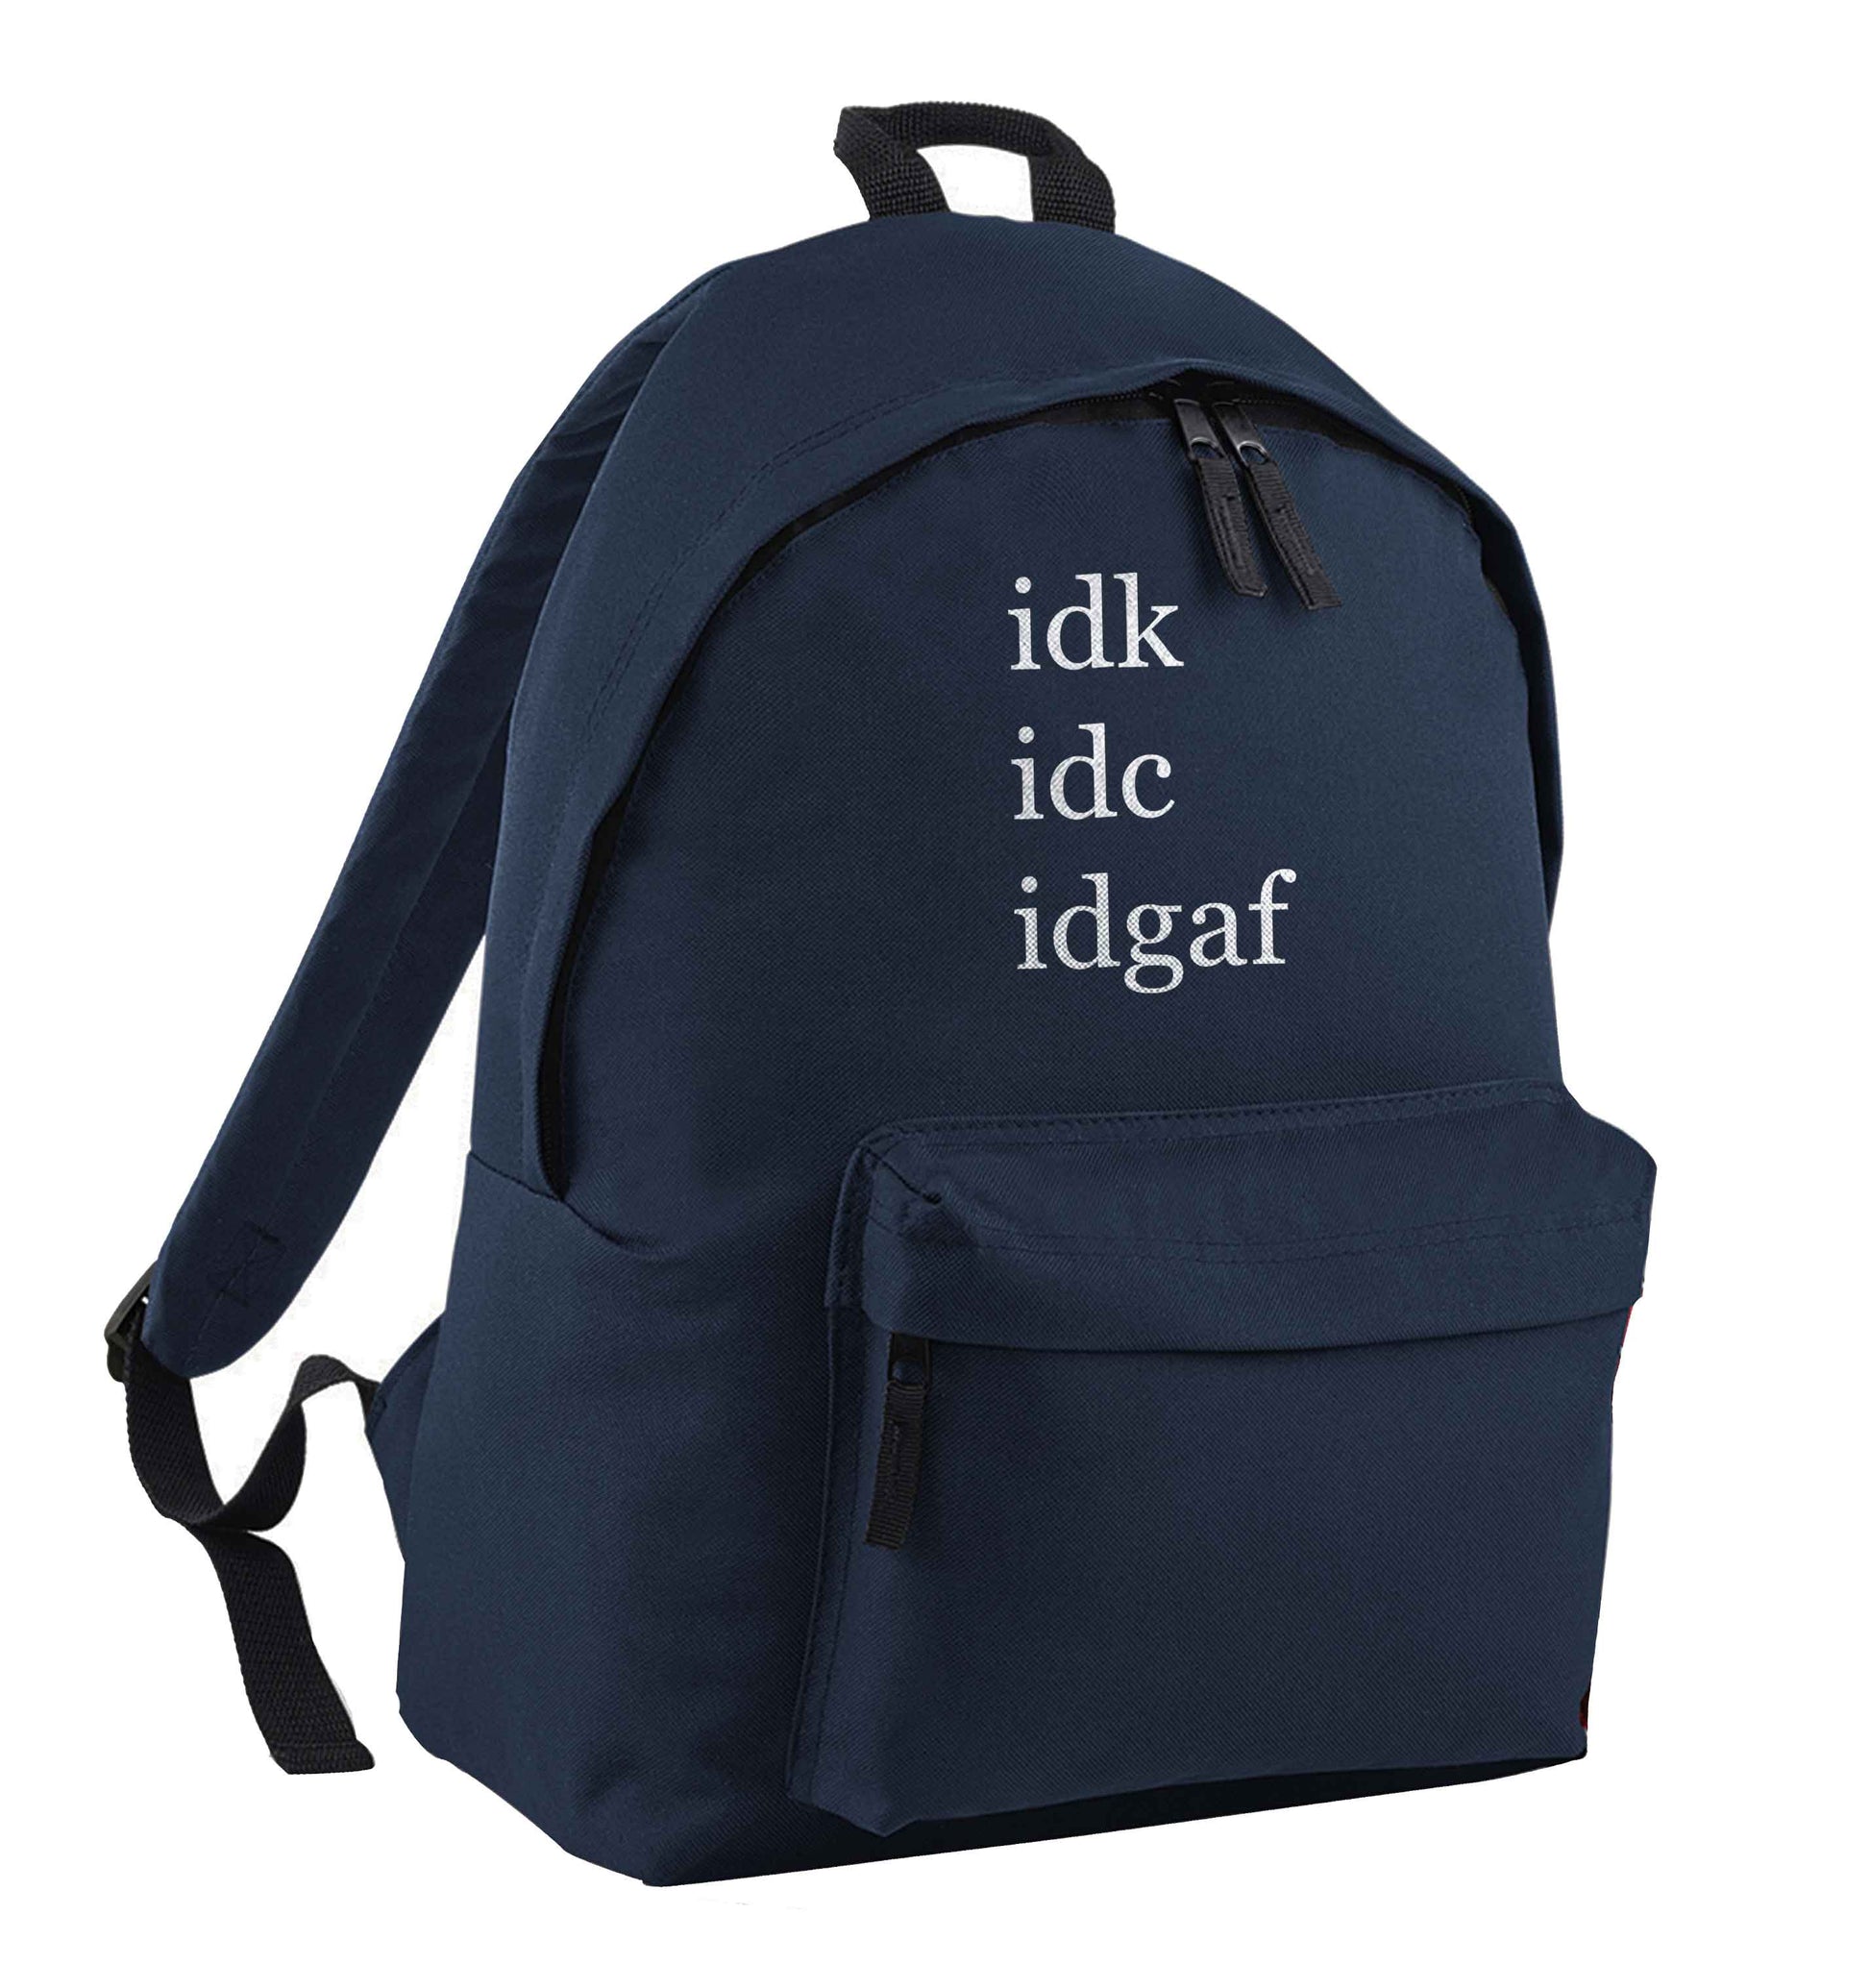 Idk Idc Idgaf navy adults backpack